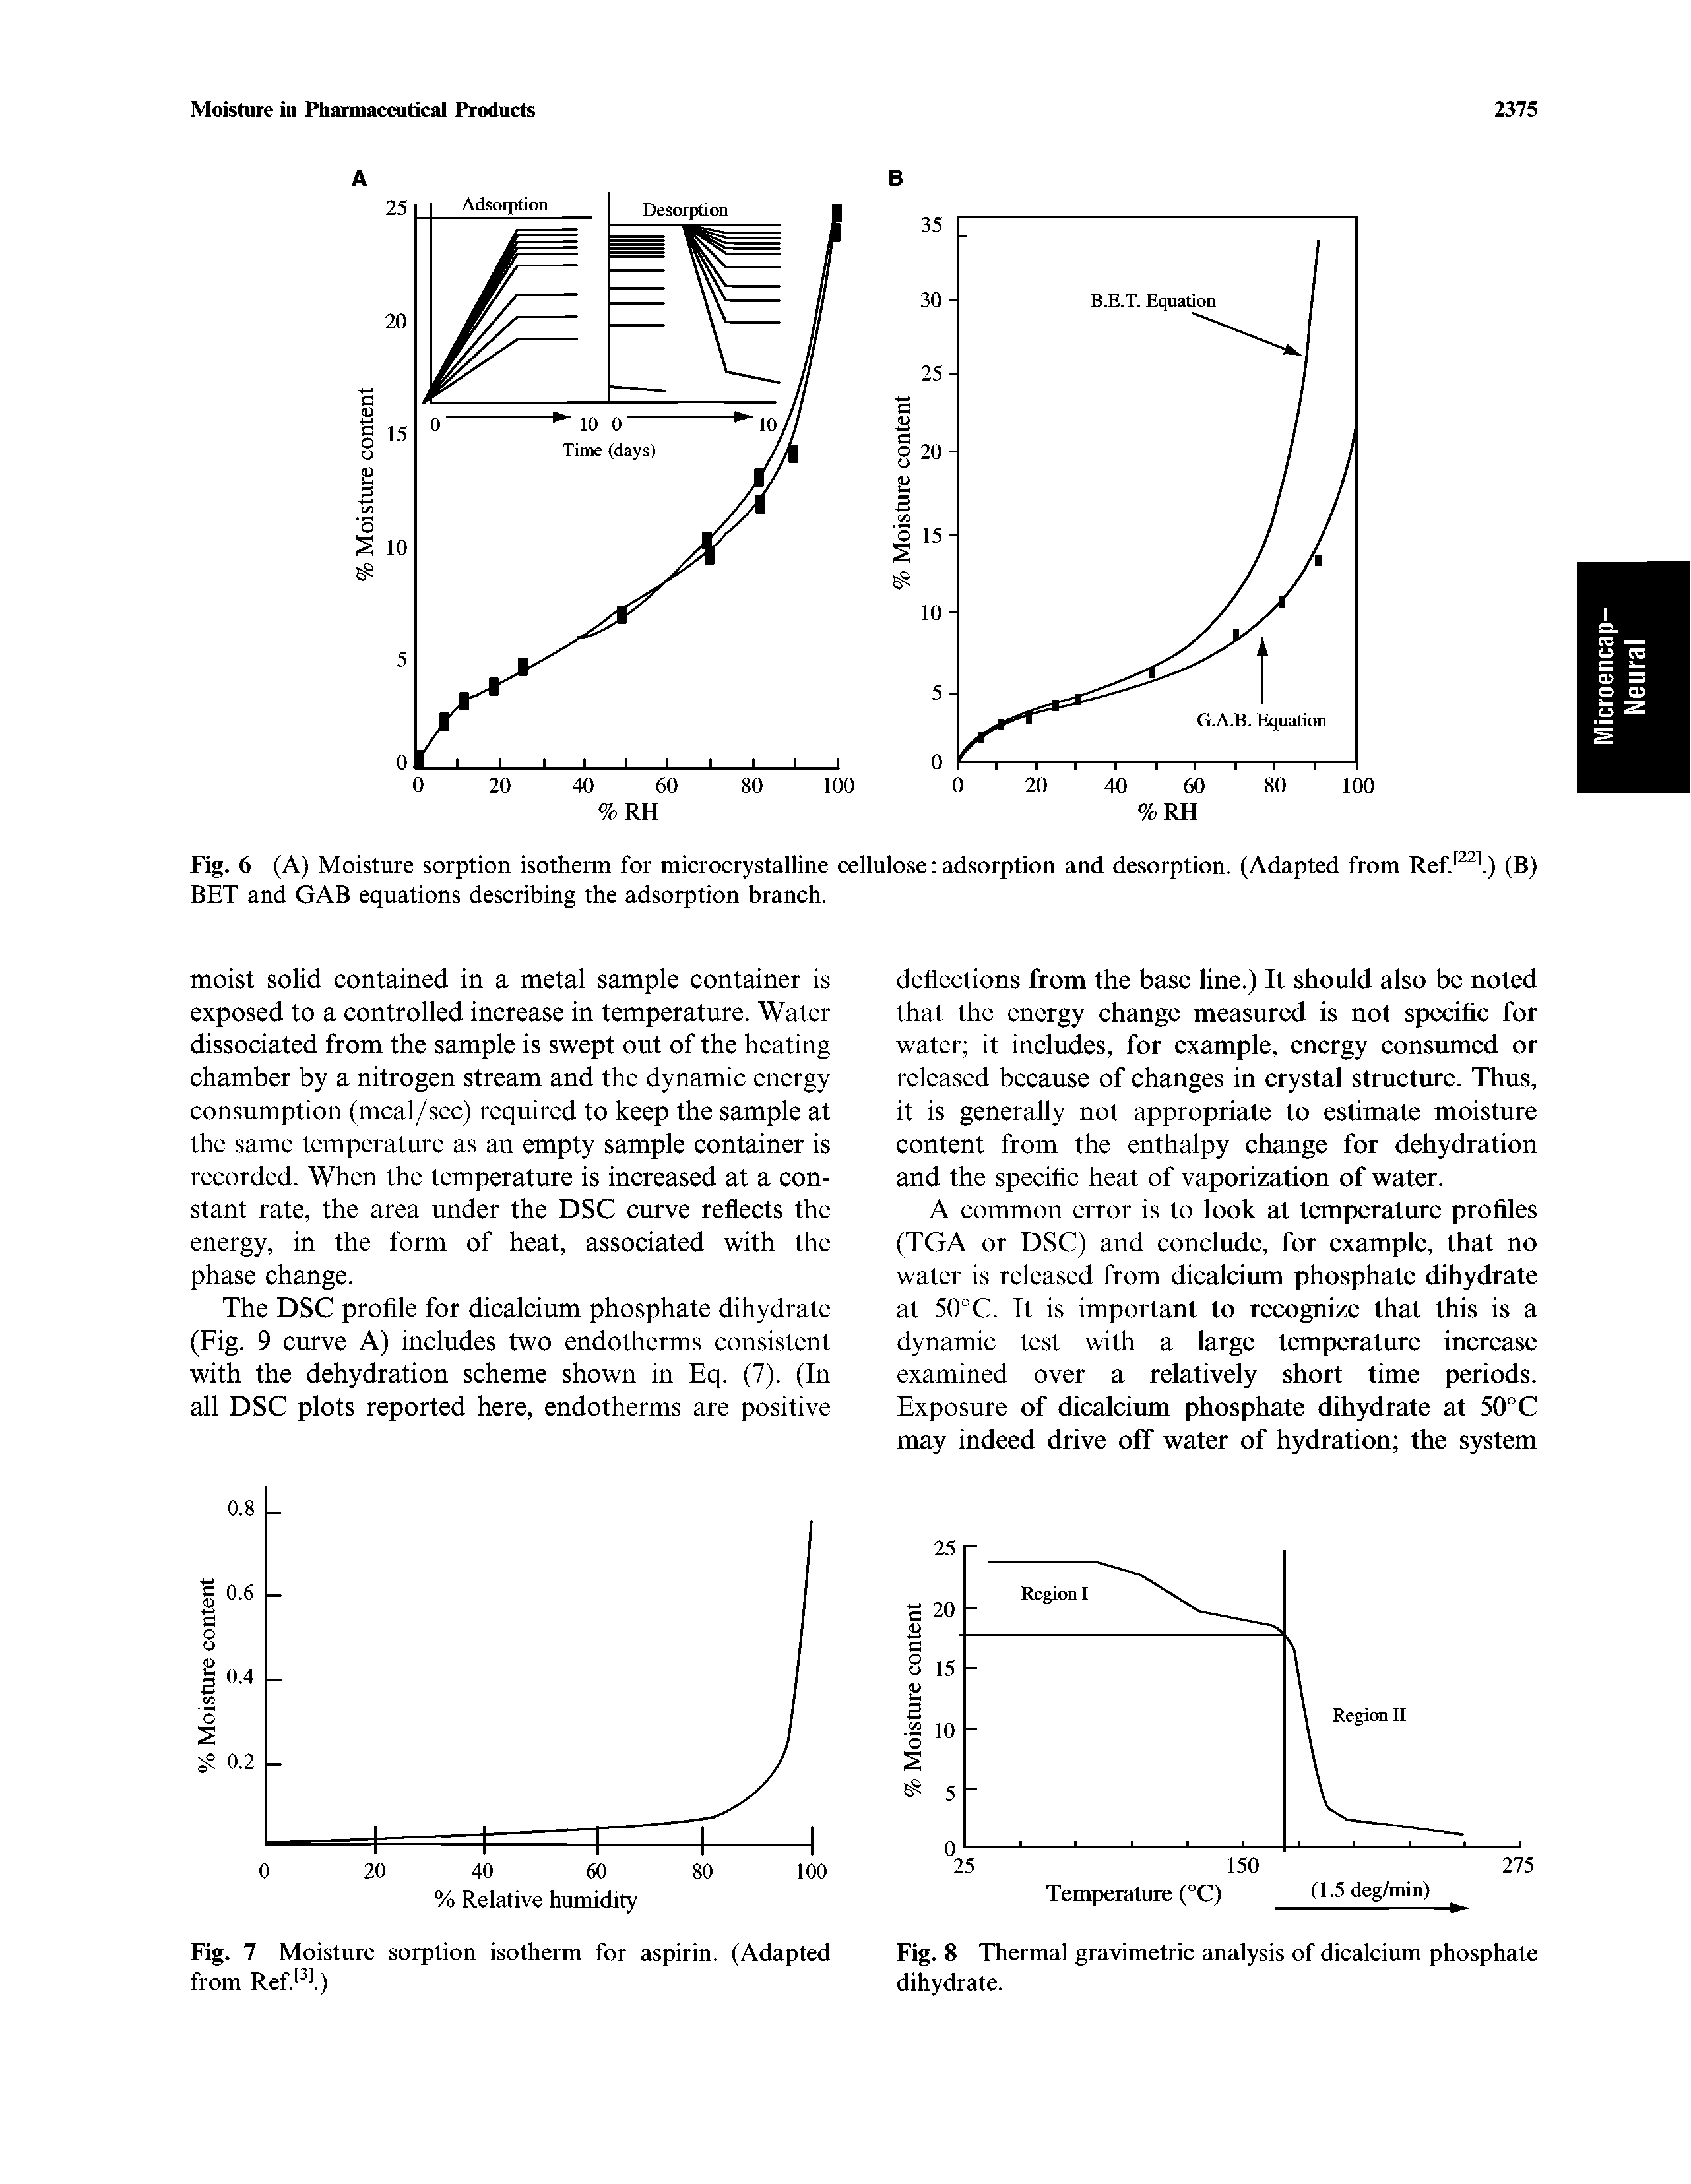 Fig. 8 Thermal gravimetric analysis of dicalcium phosphate dihydrate.